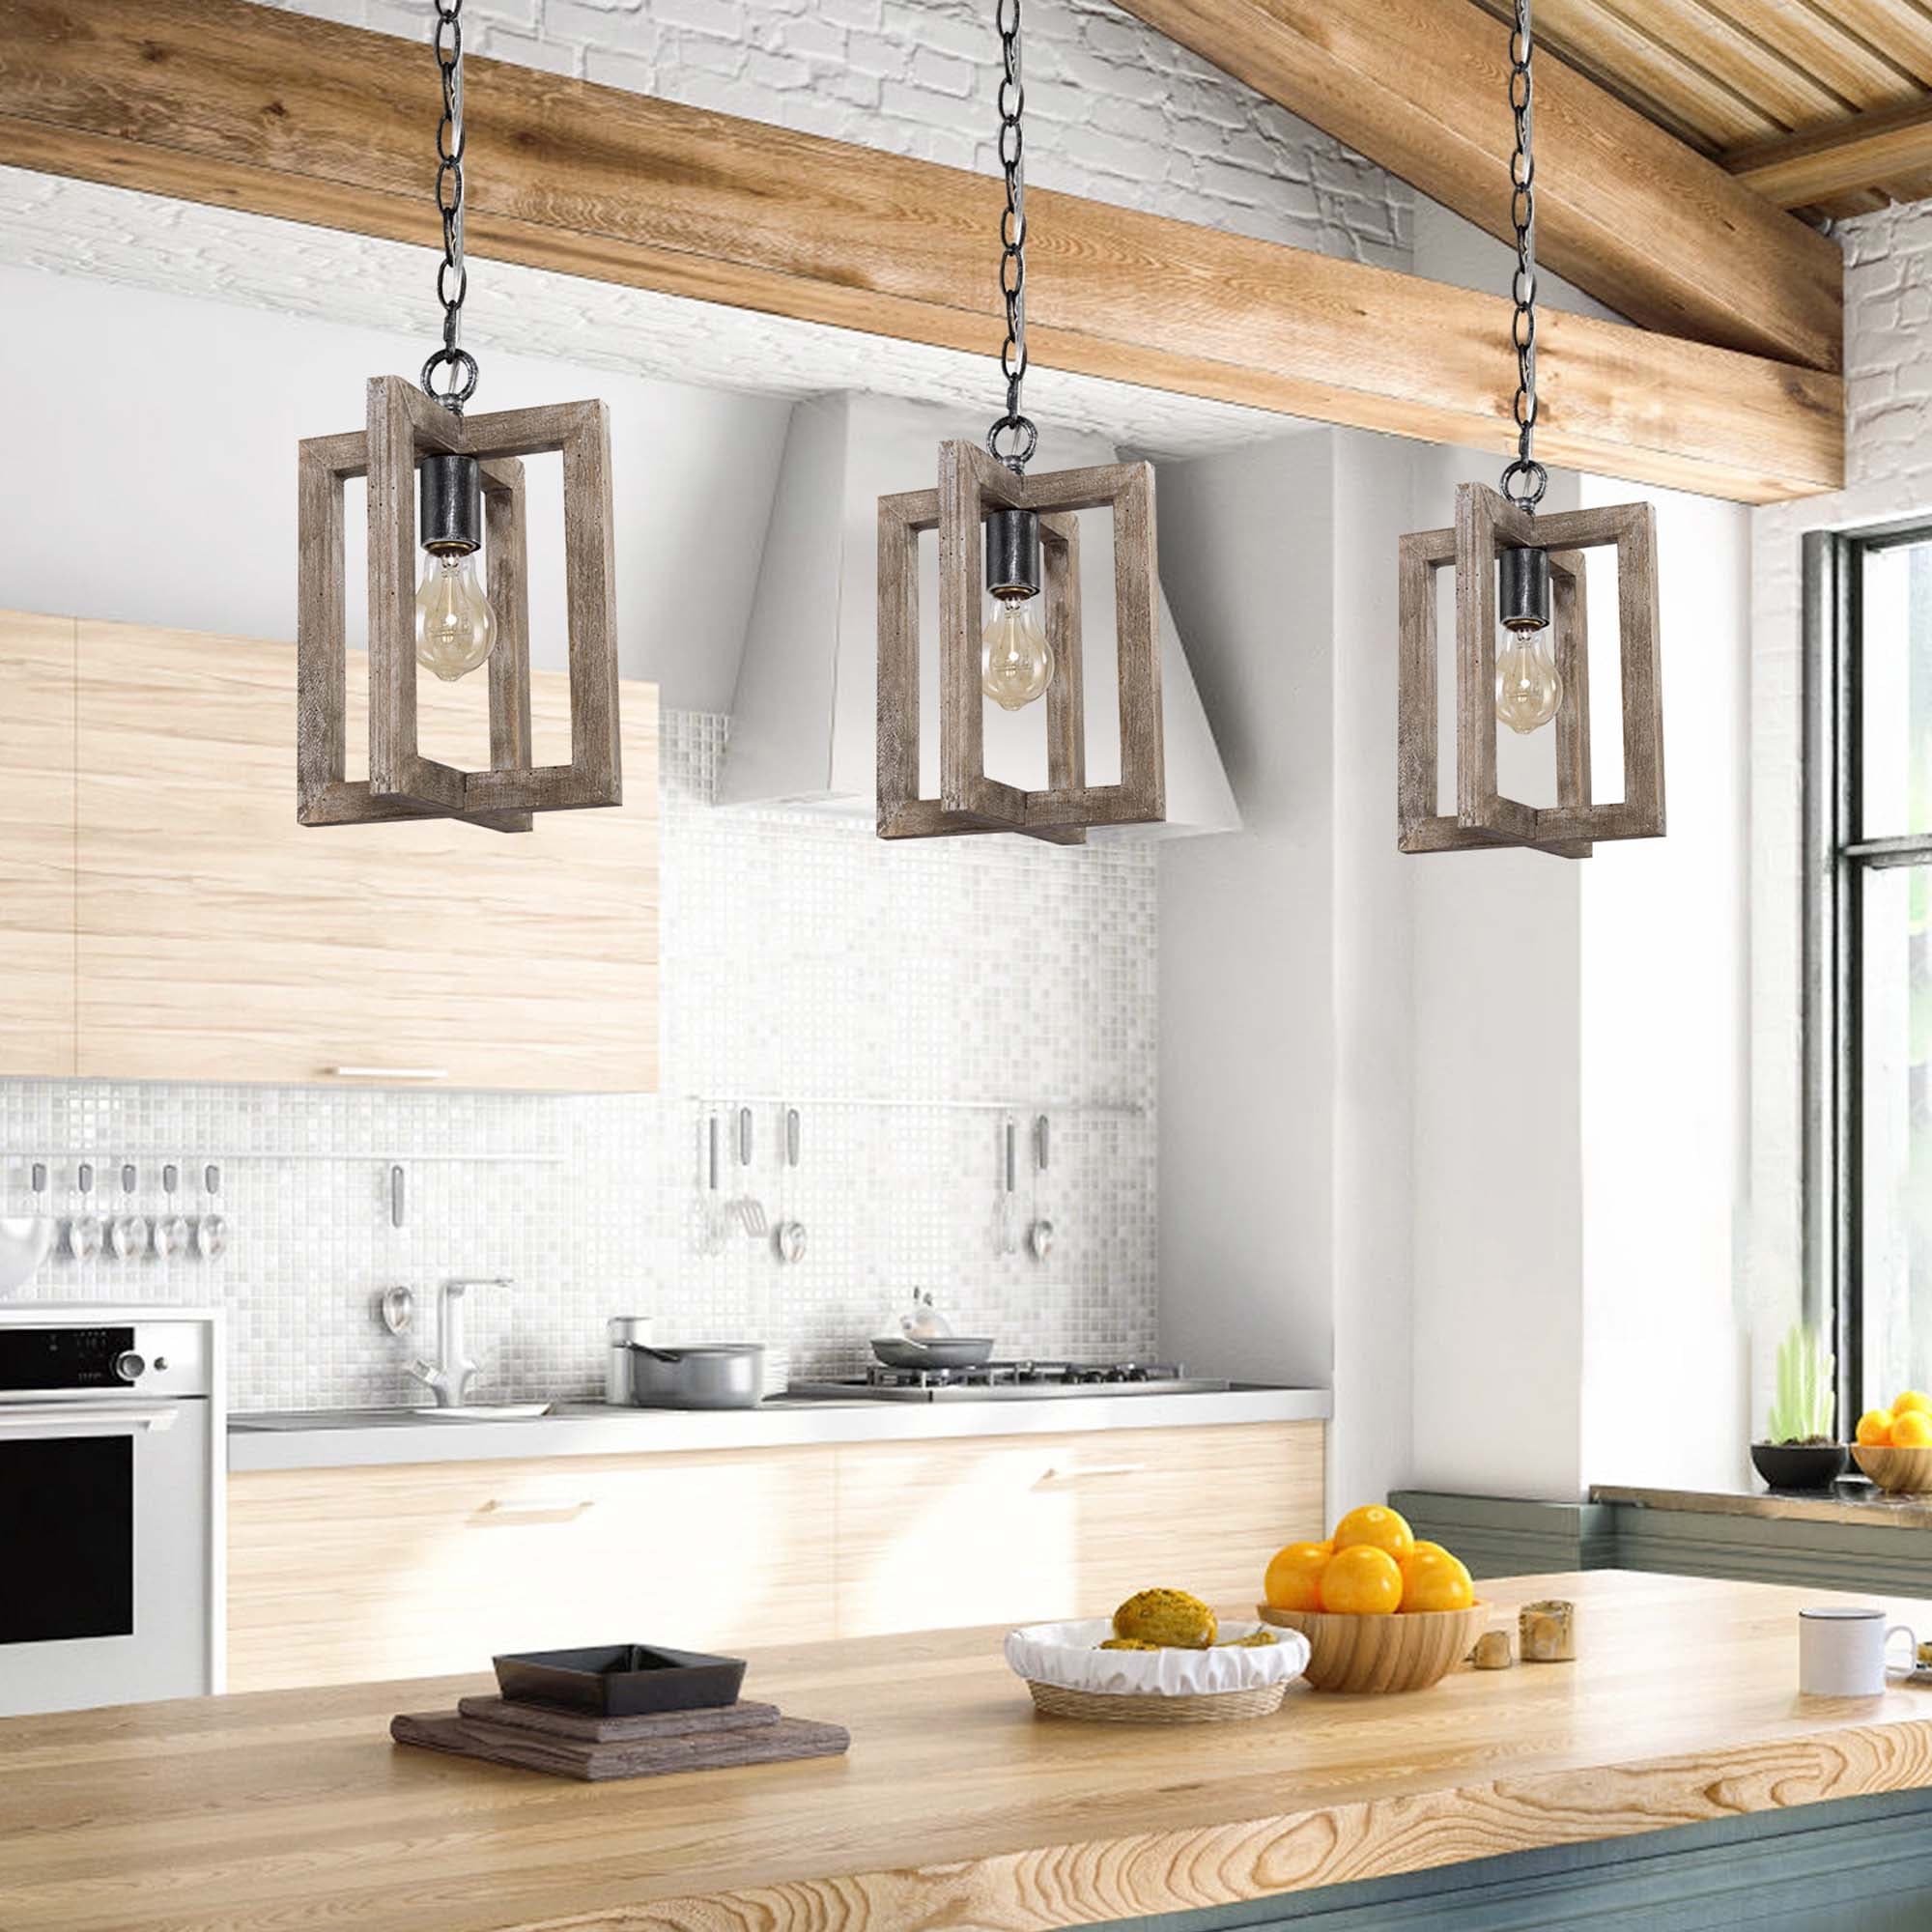  hanging pendant lights over kitchen island